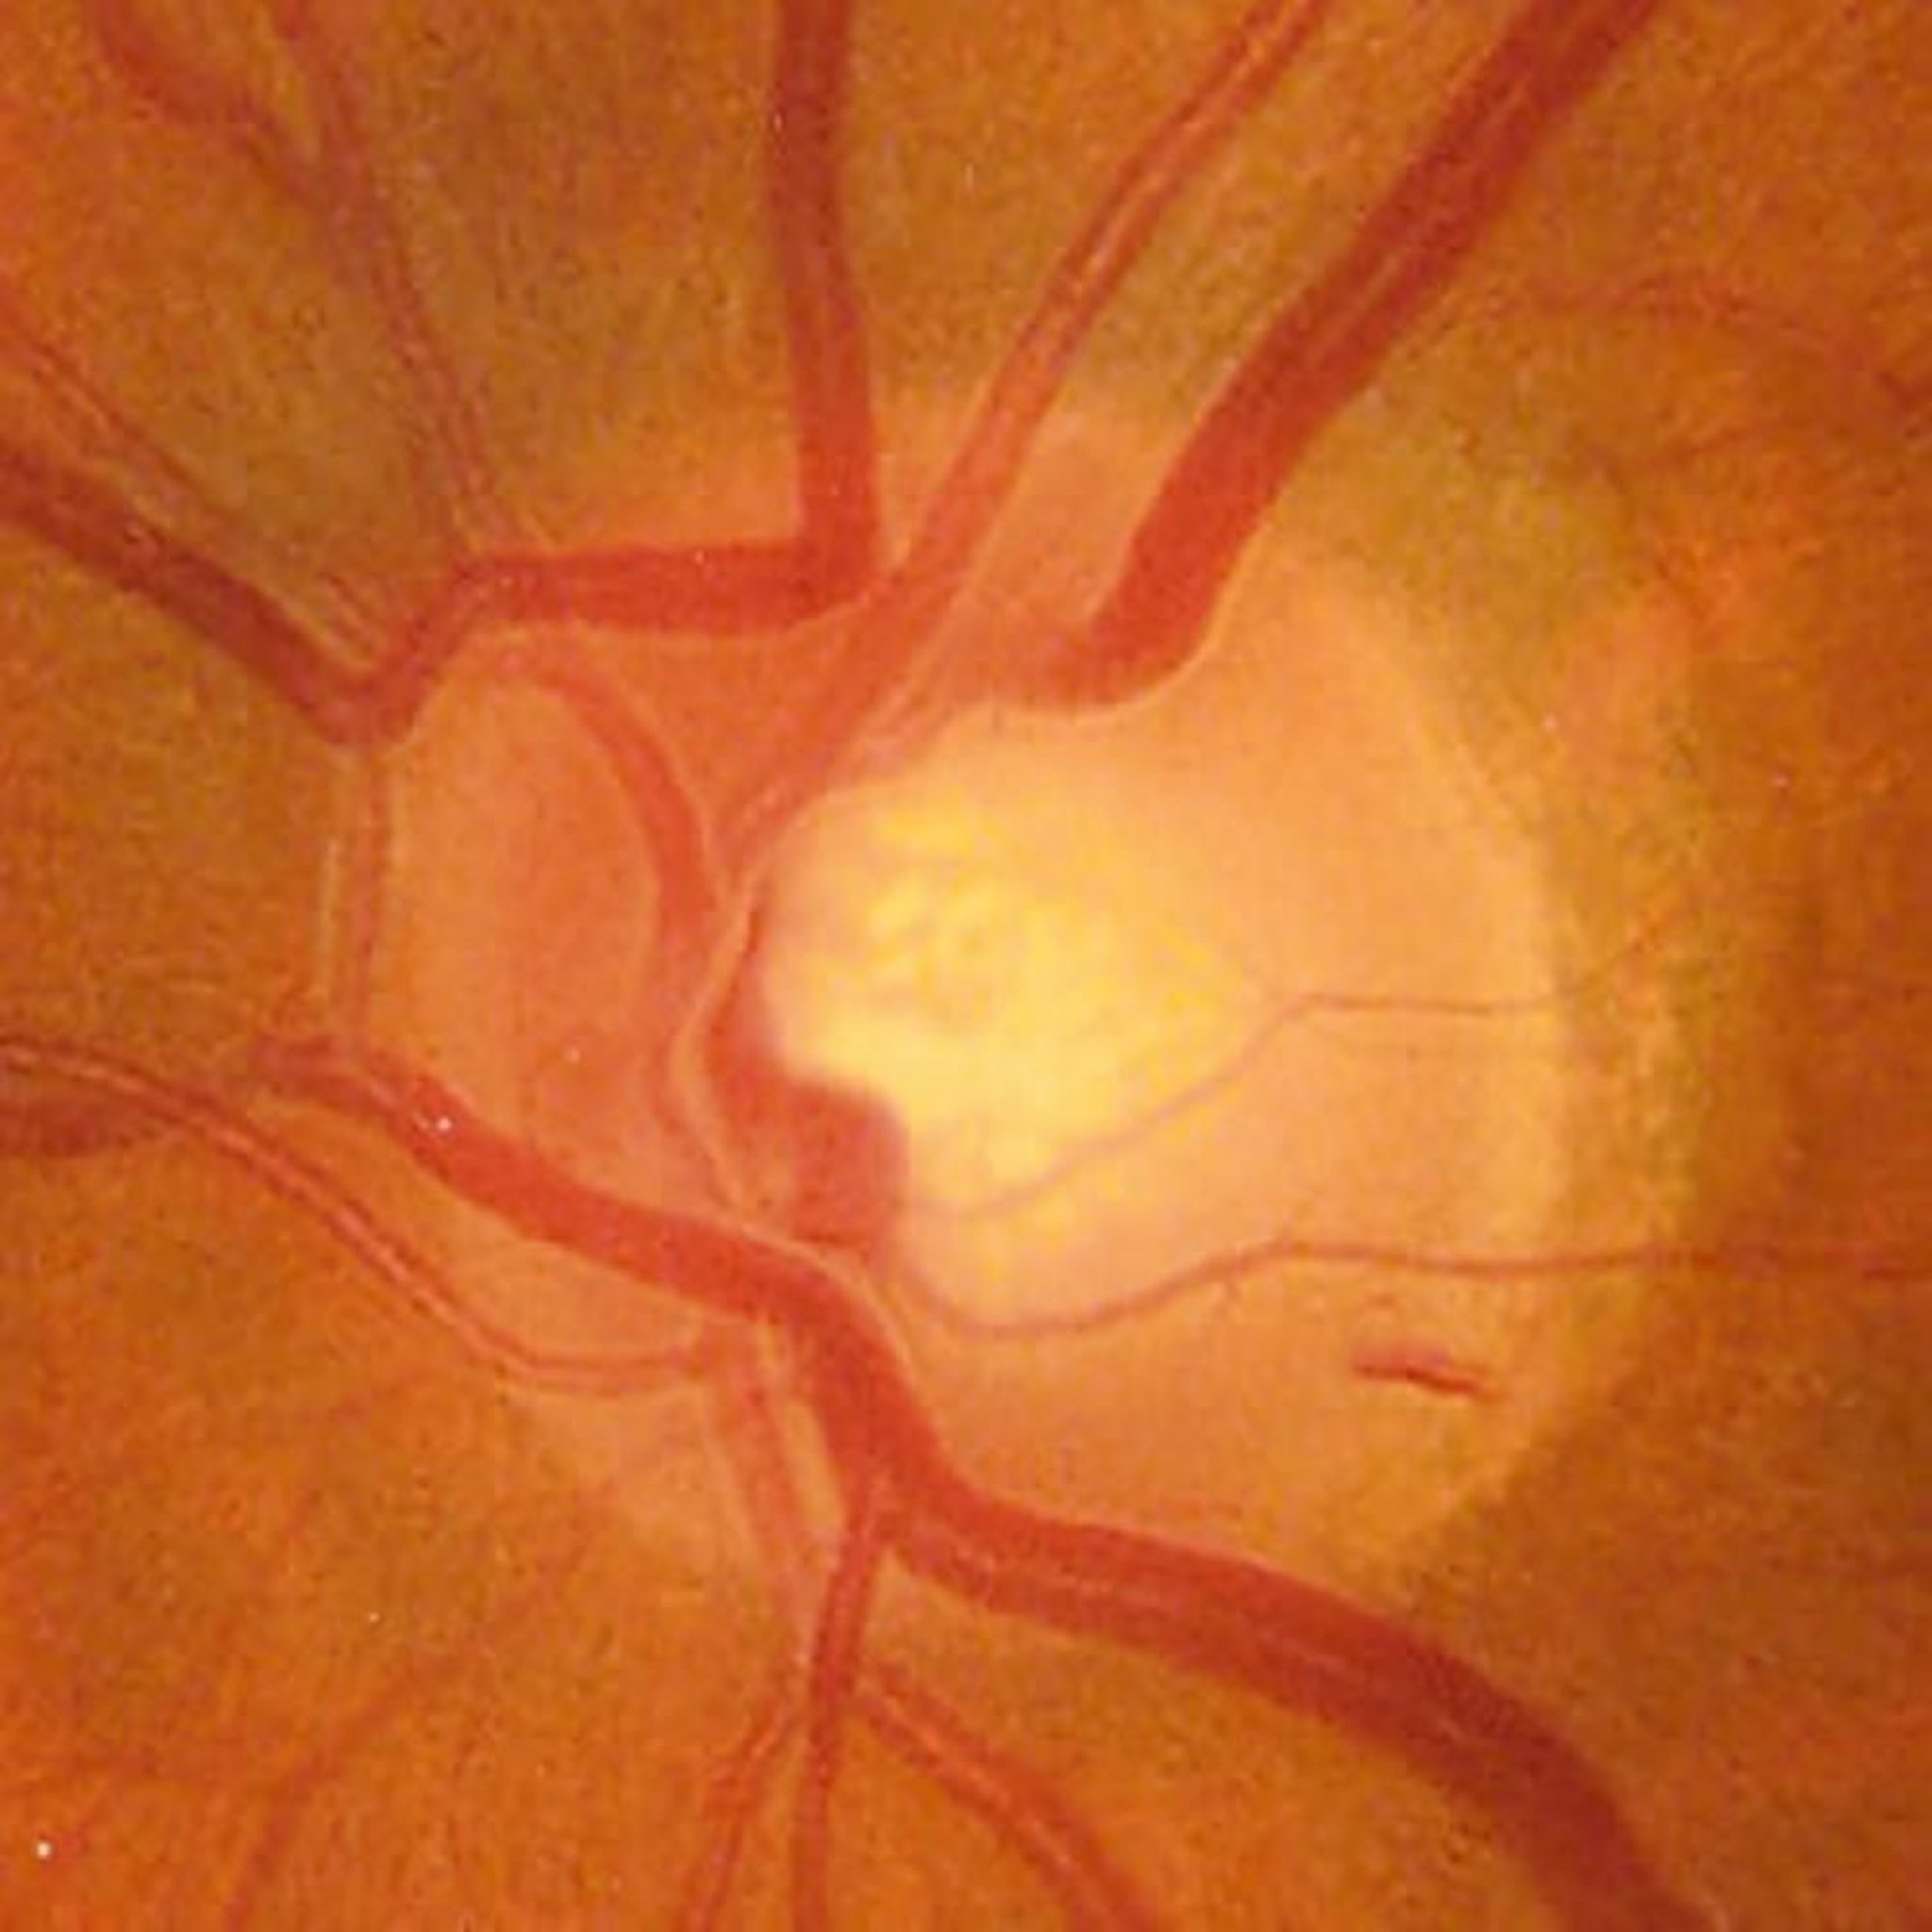 Glaucoma (hemorragia en la papila óptica)